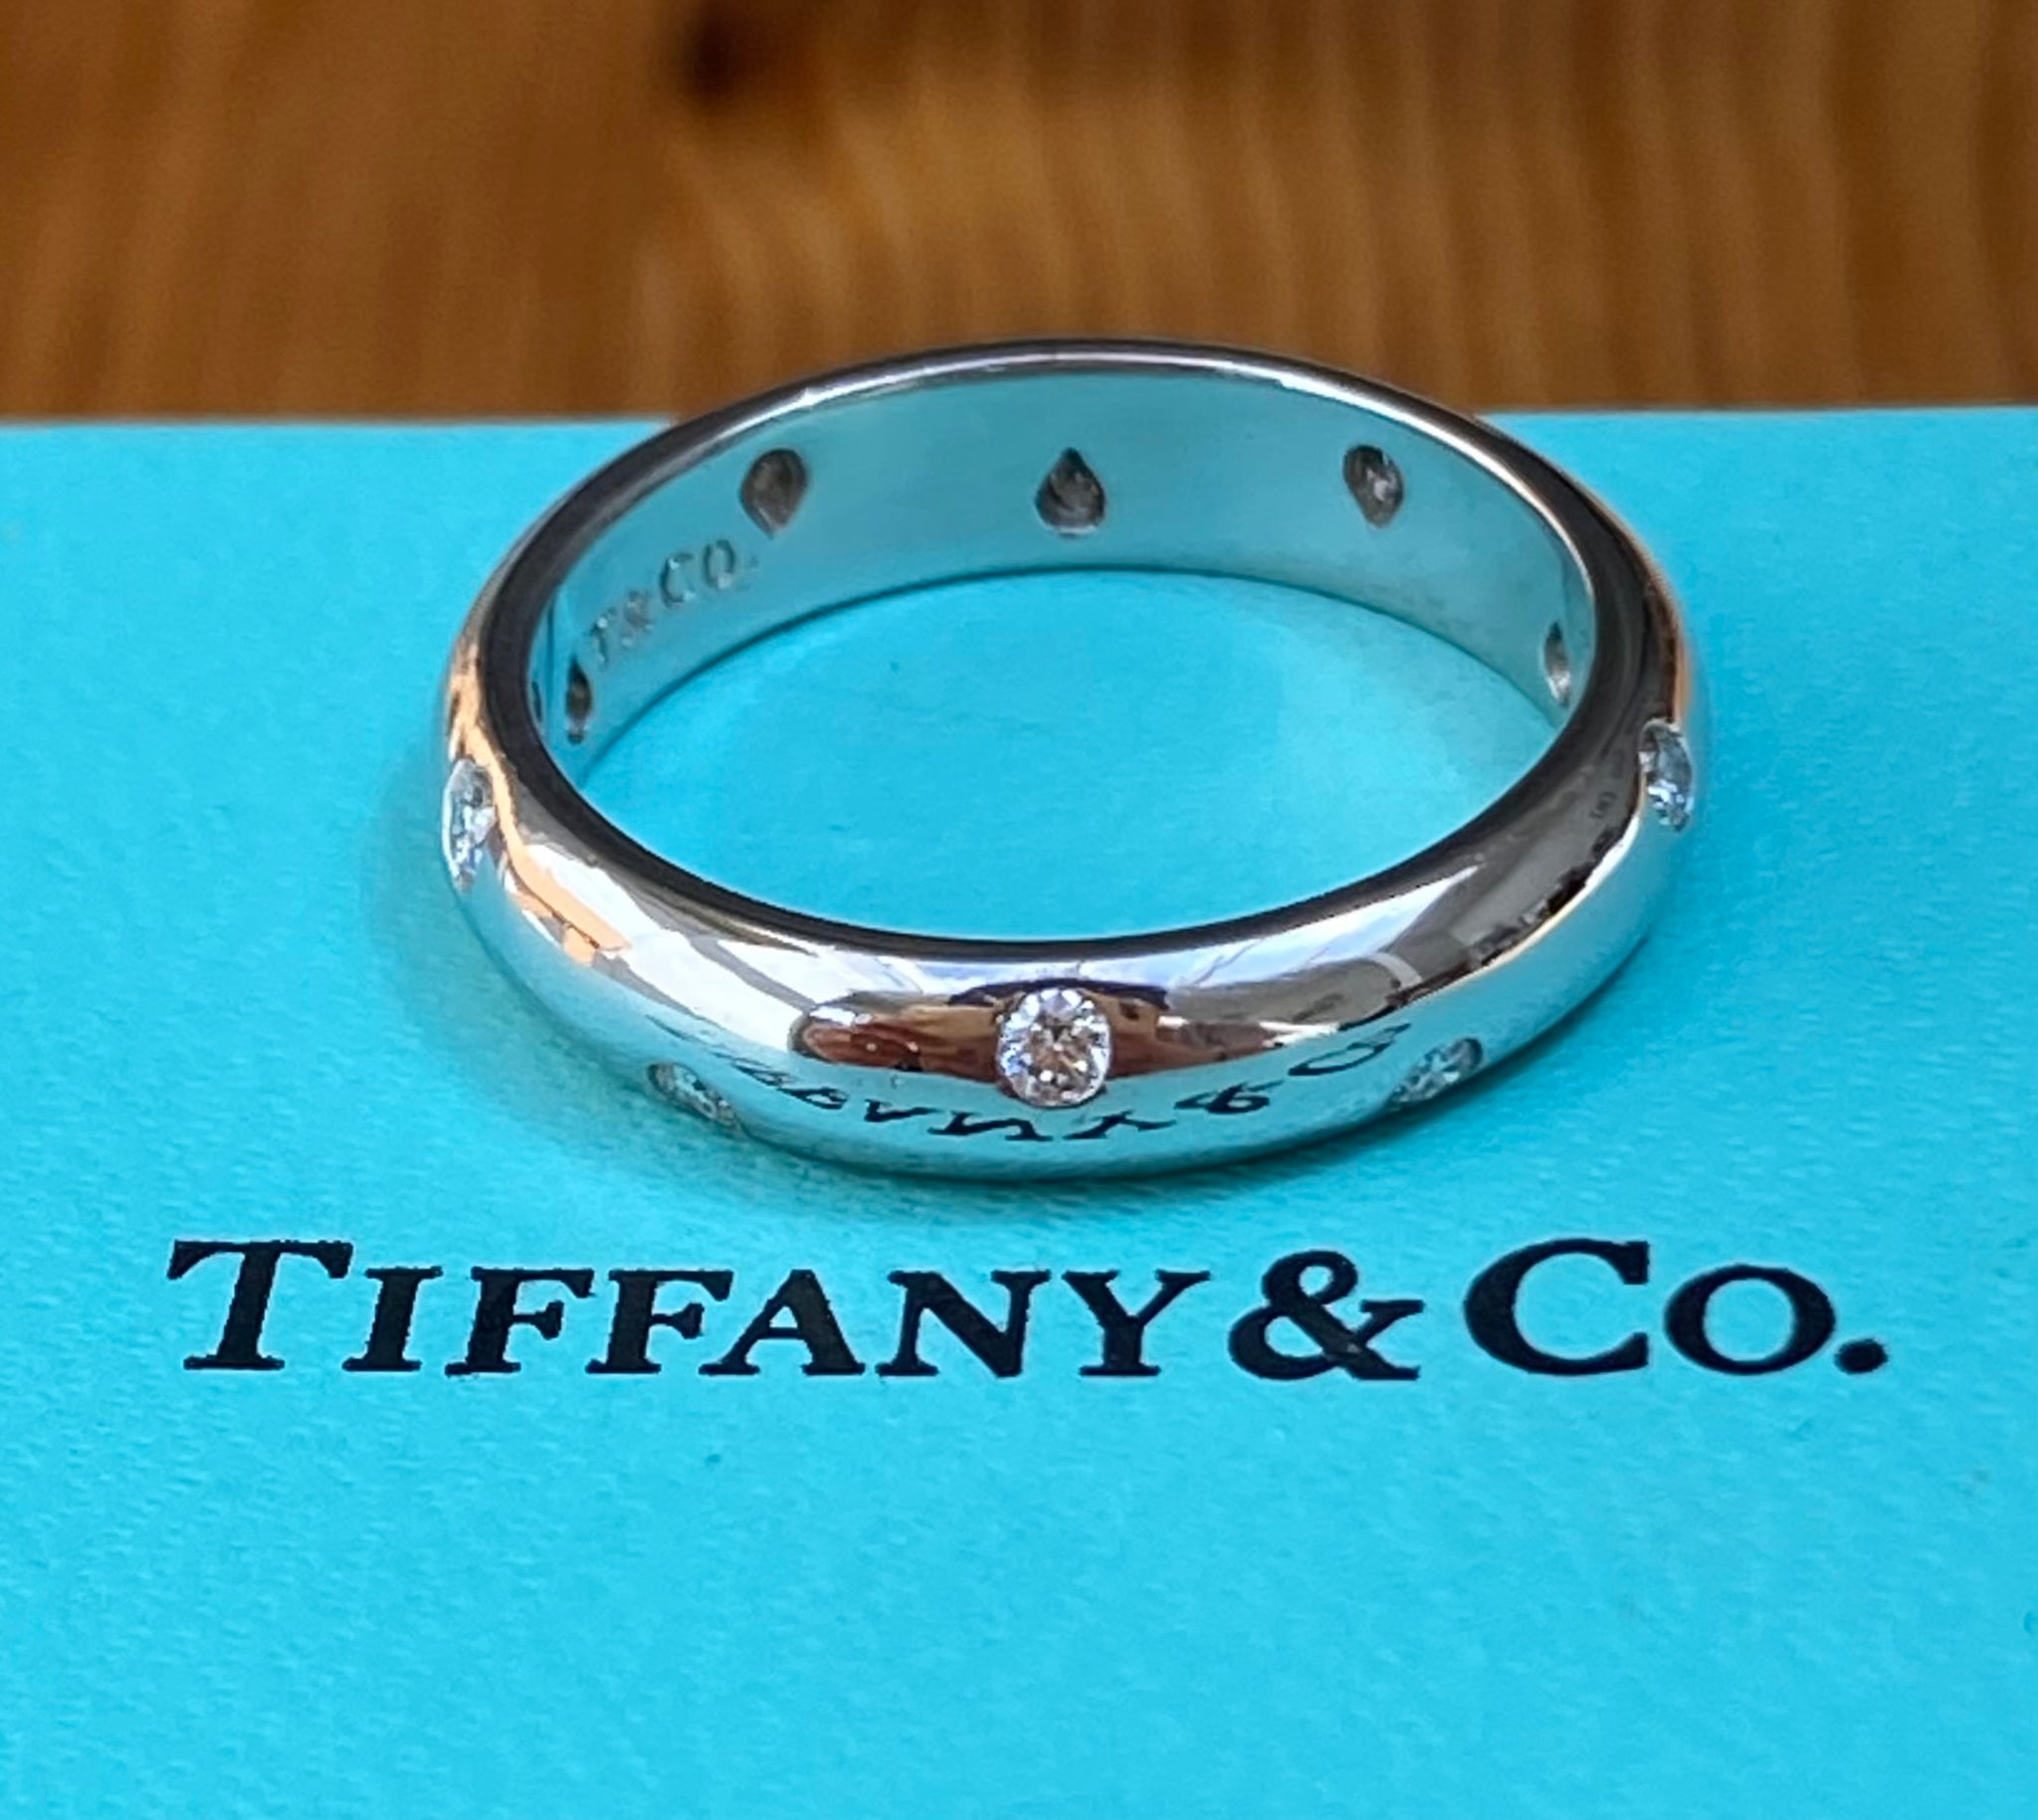 Tiffany & Co. 0.22tcw Diamond Etoile Ring in Platinum Size 5.25 RRP $5250